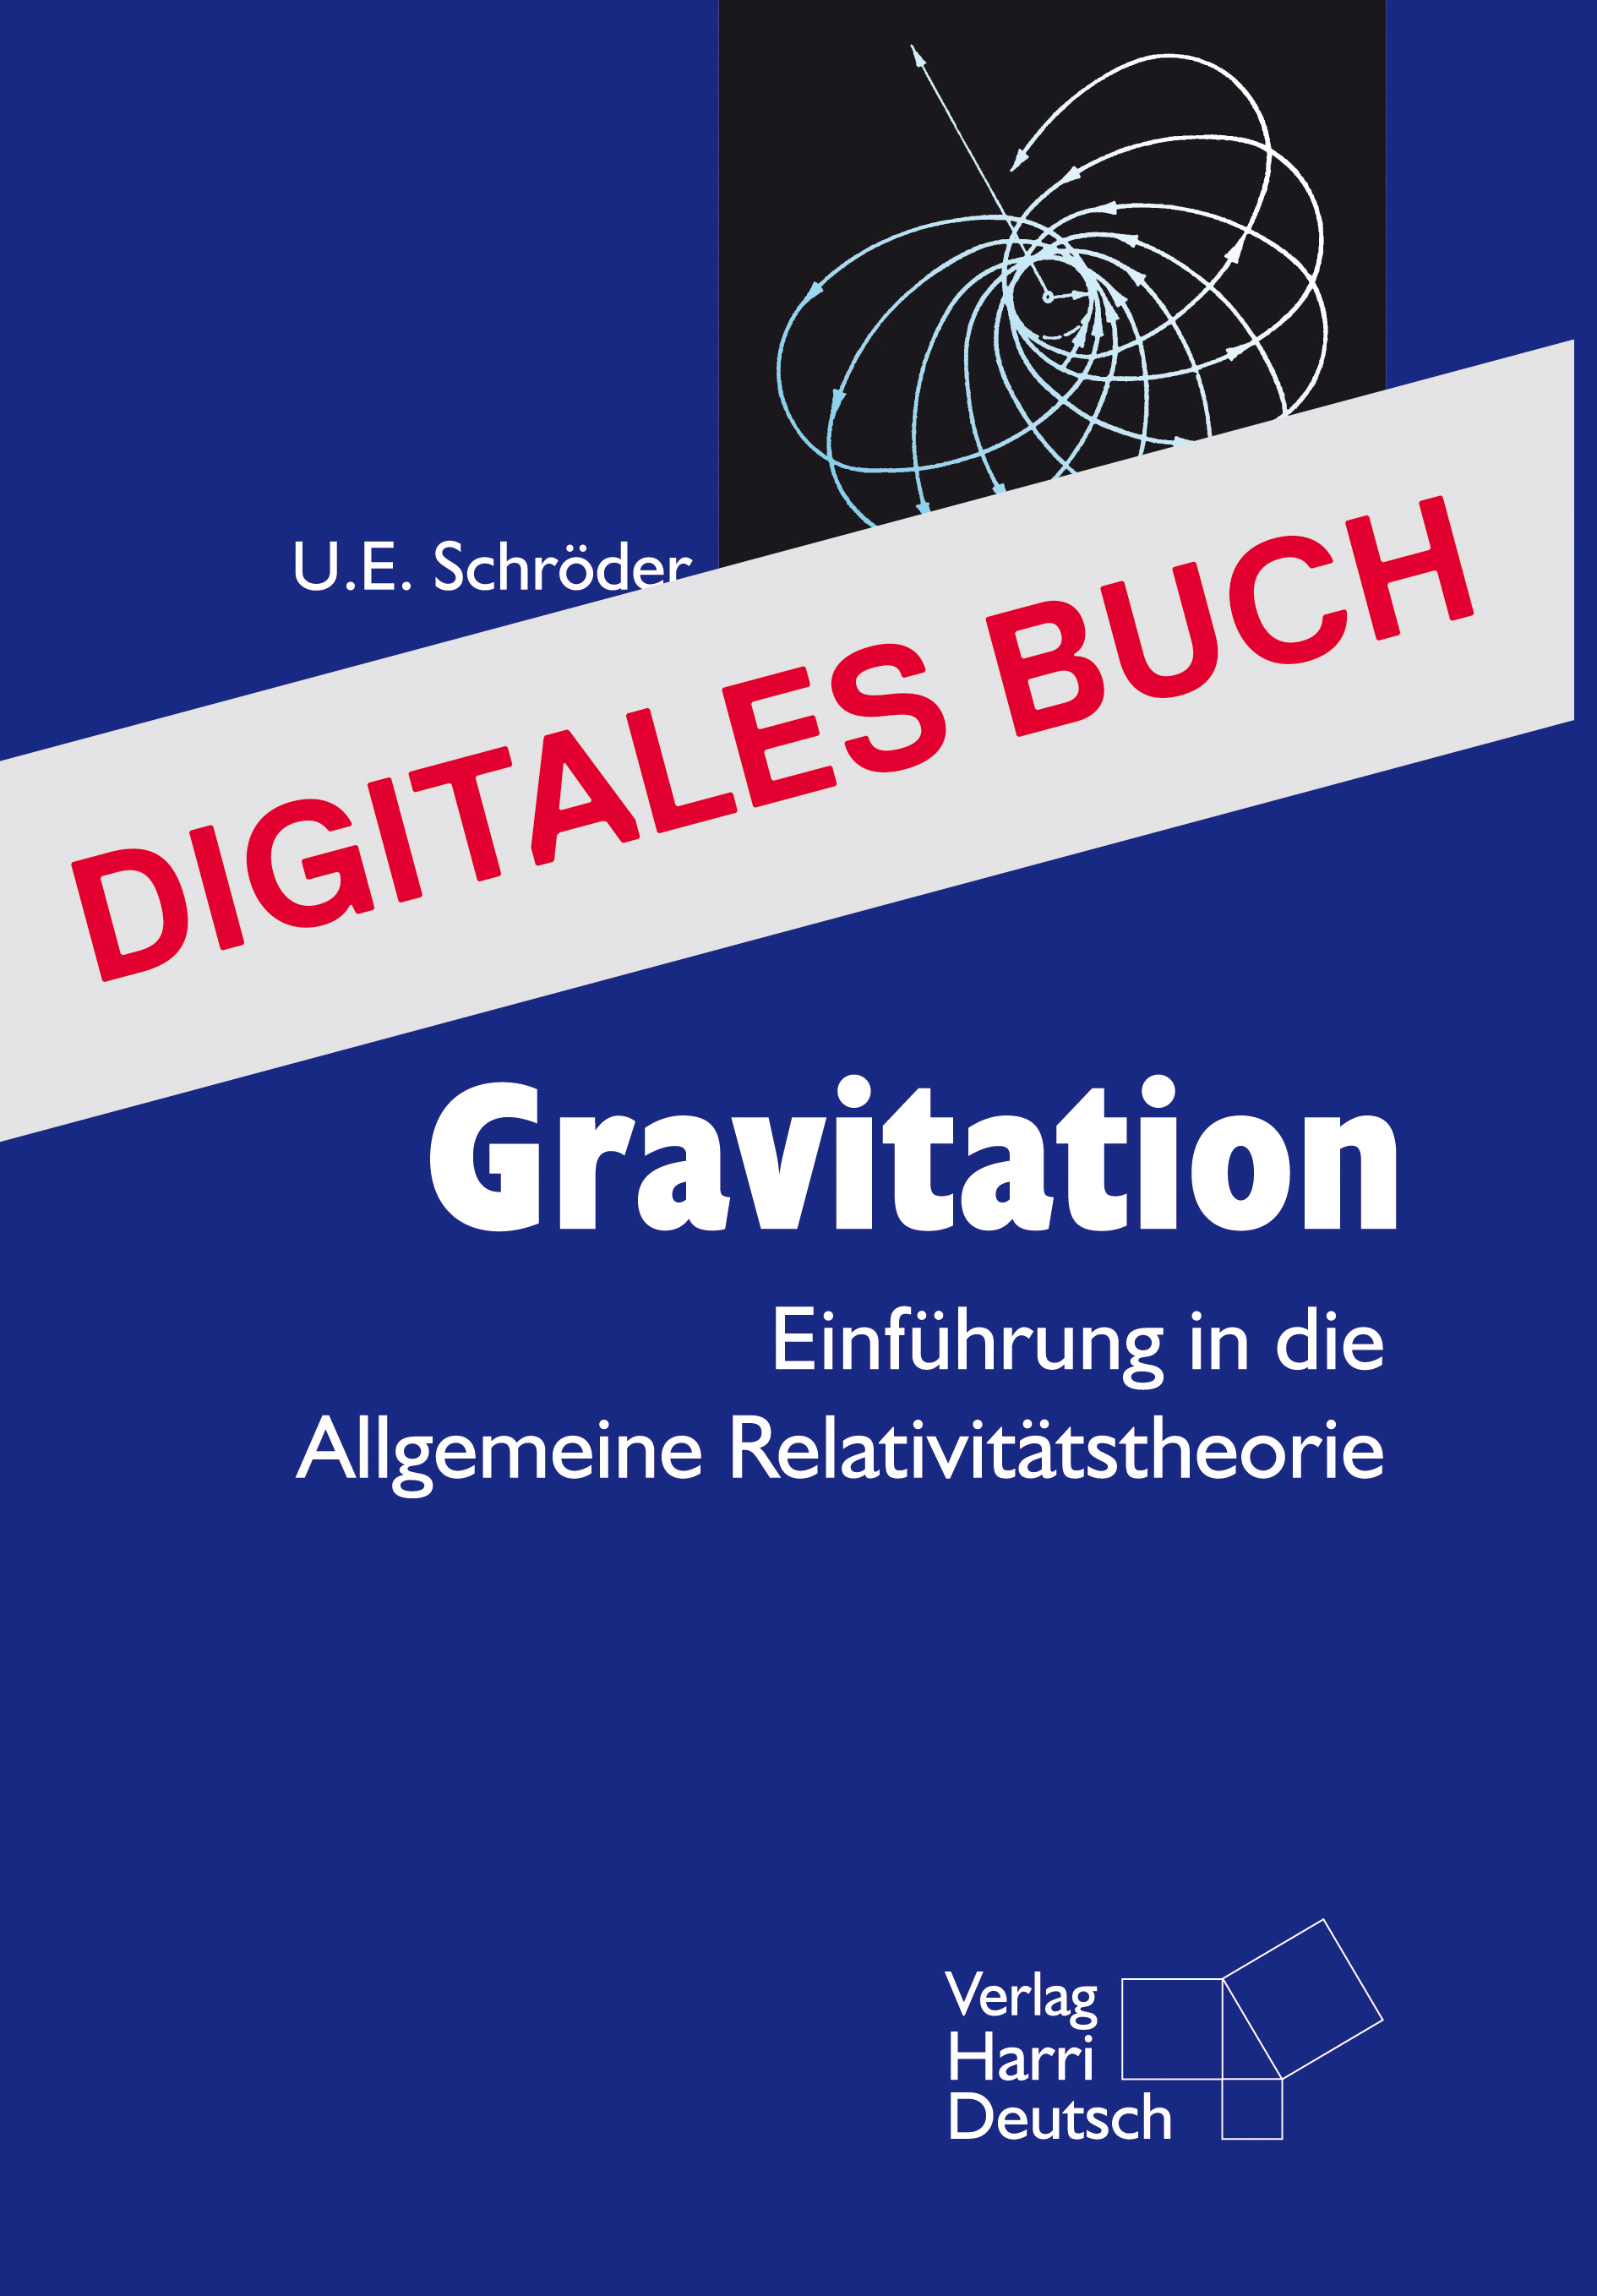 Gravitation - Digitales Buch